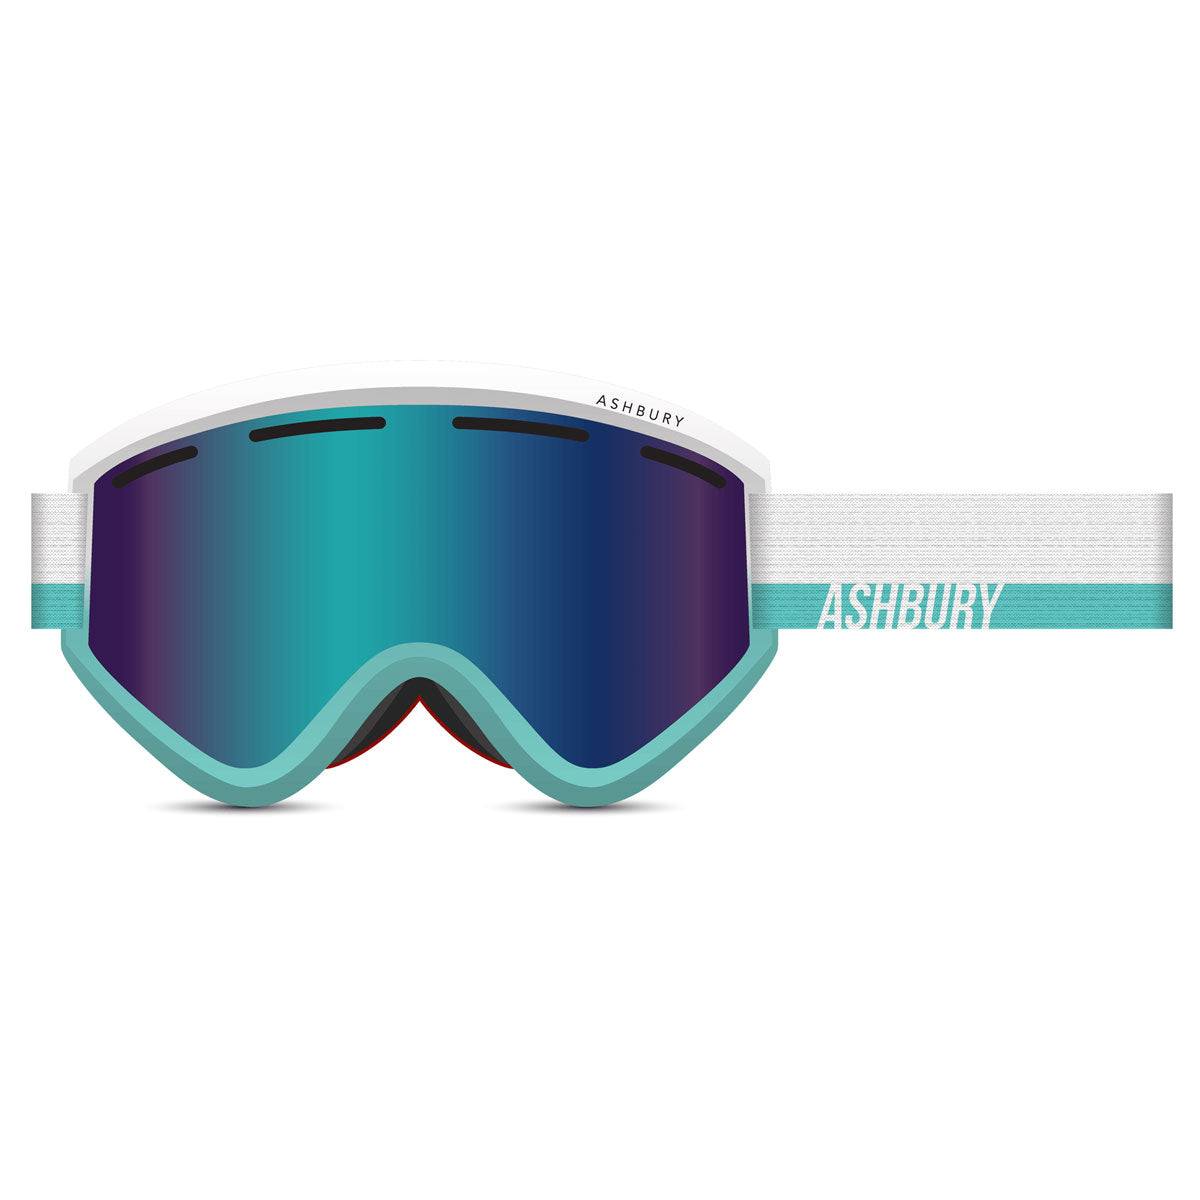 Ashbury Blackbird Miramar Snowboard Goggles - Teal Mirror/Yellow Spare image 1